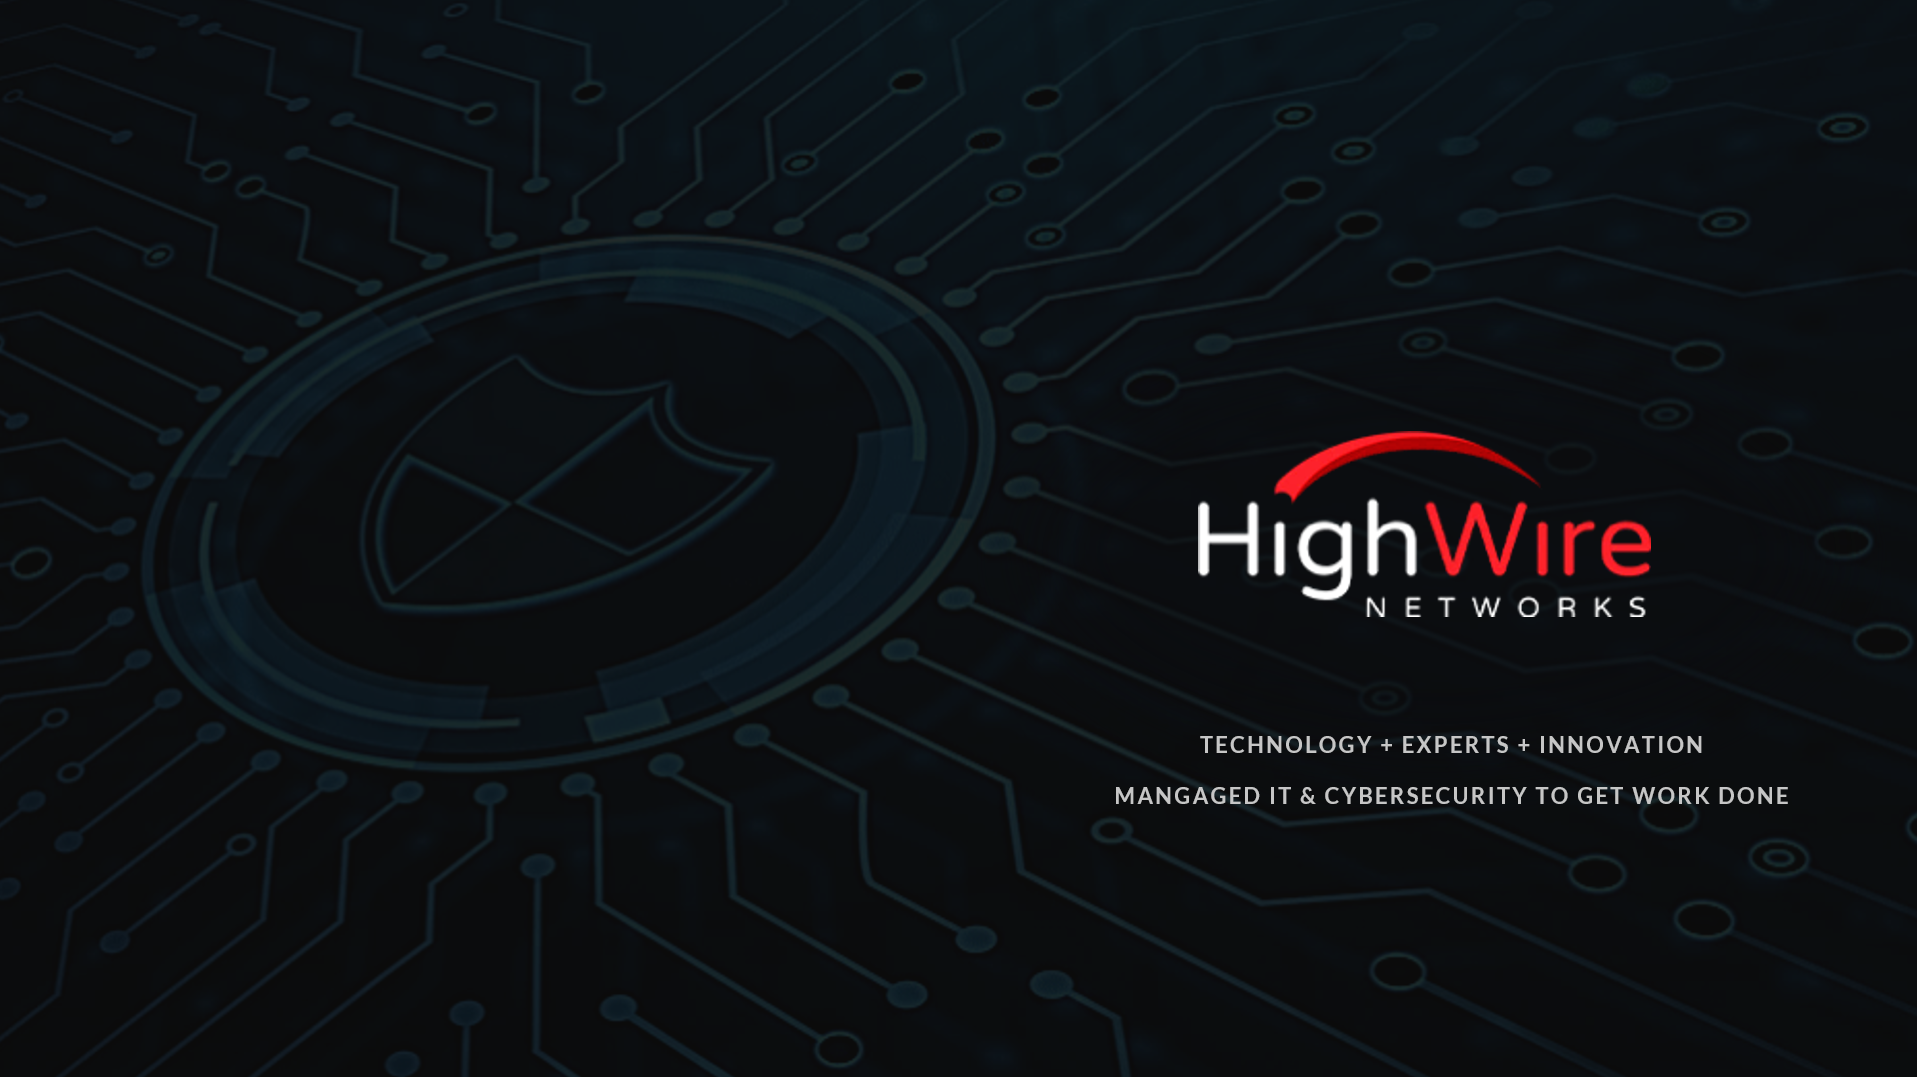  High Wire Networks   OTQQB: HWNI   Highwirenetworks.com   Graphic design by CMA.    